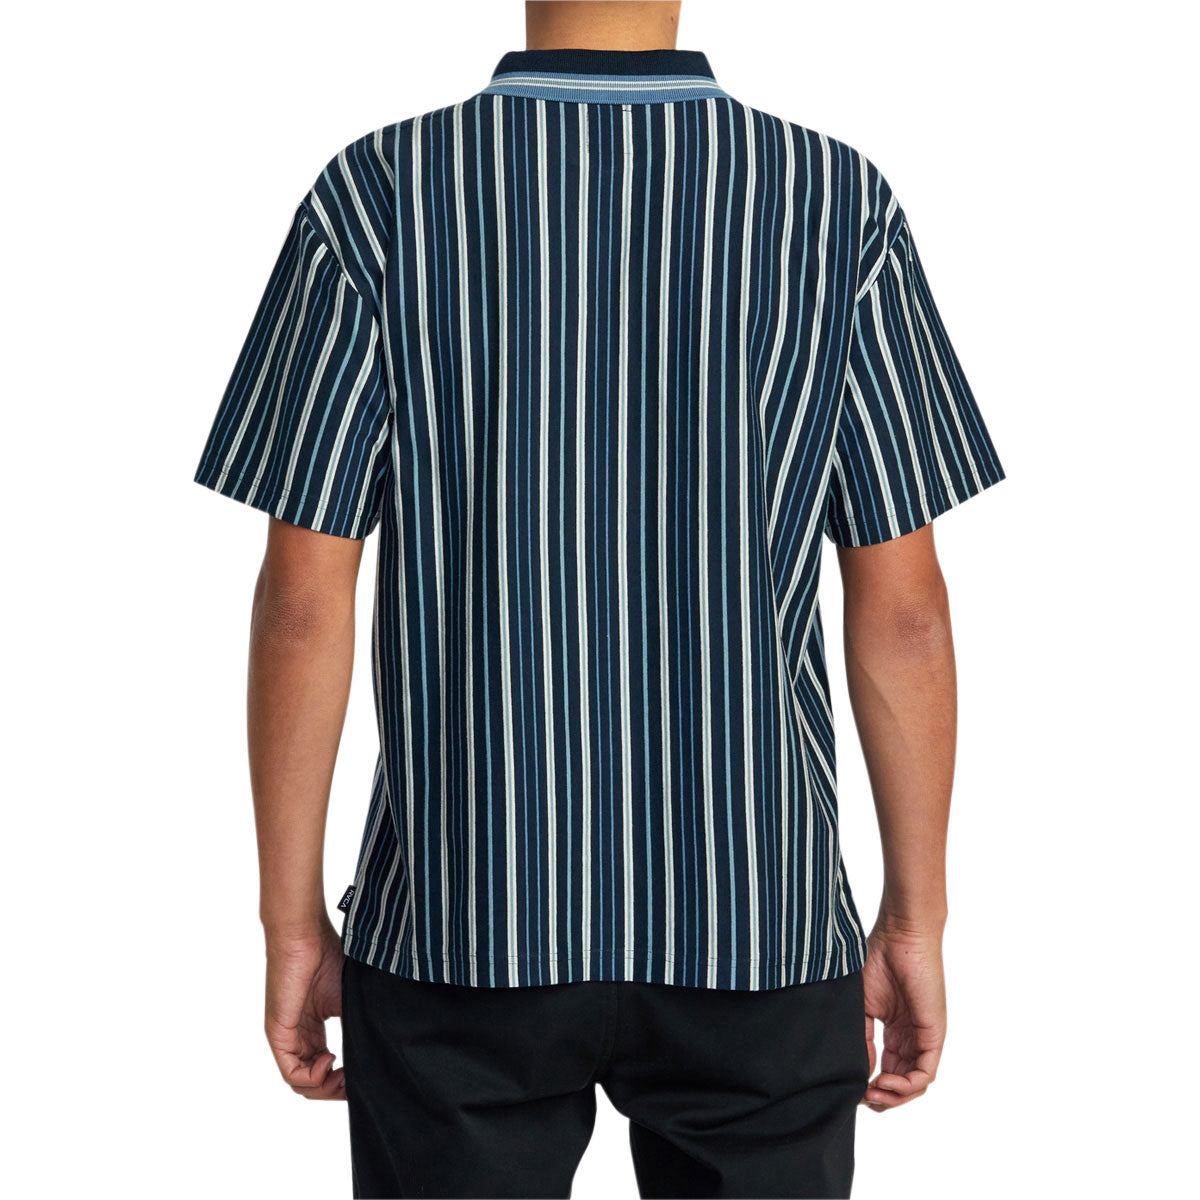 RVCA Uptown Stripe Polo Shirt - Moody Blue image 2